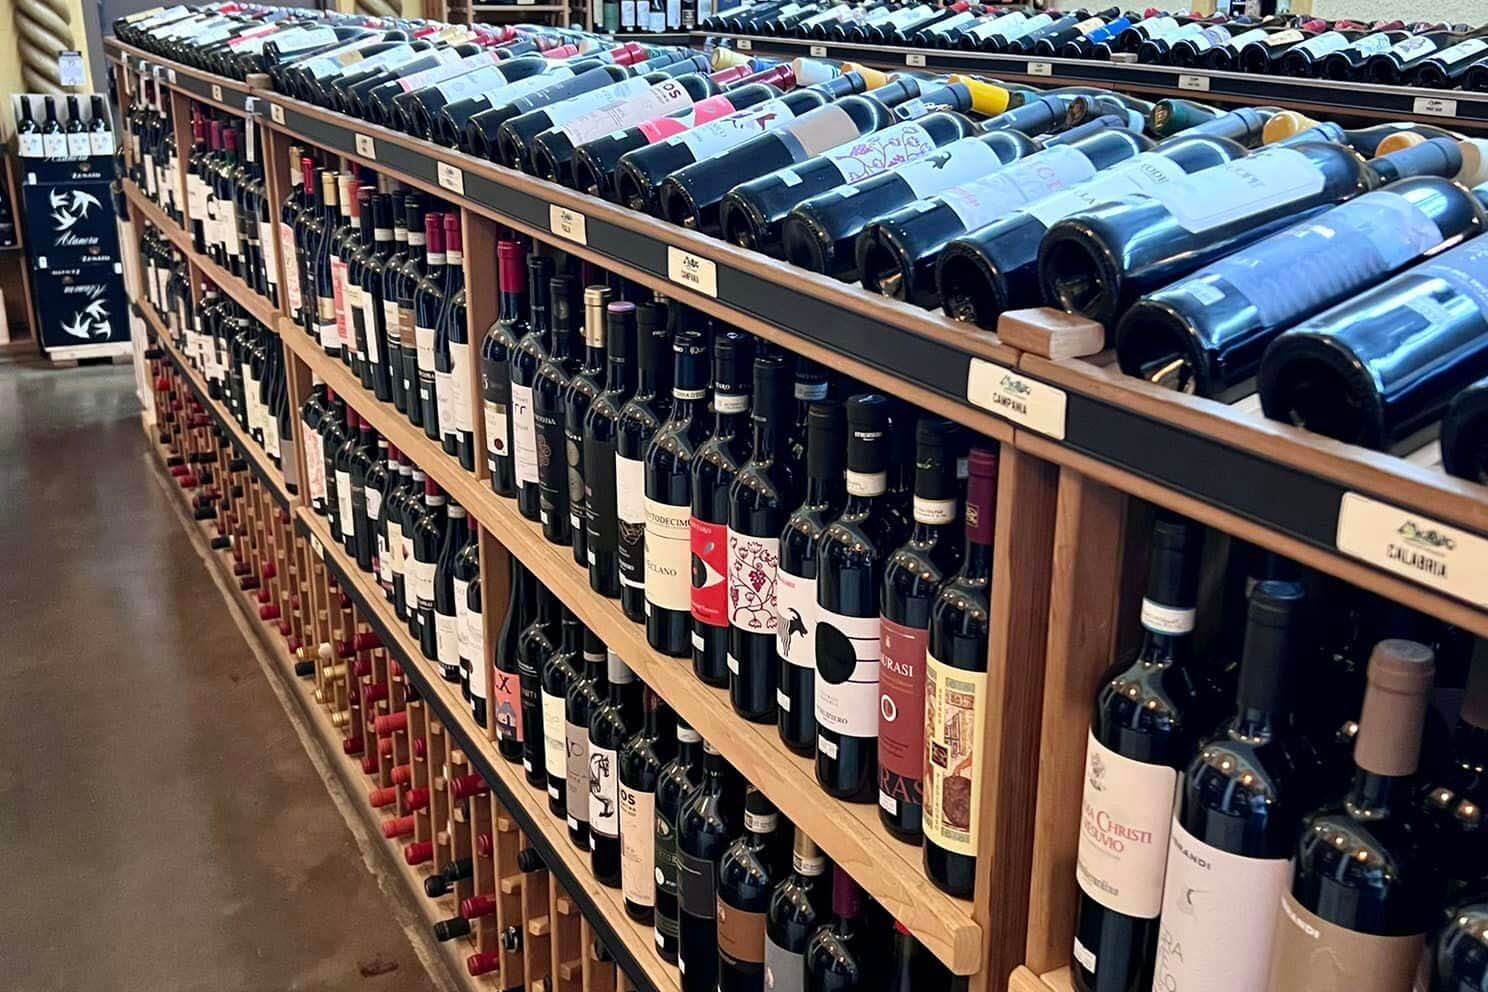 Wine bottles on the shelf at the market